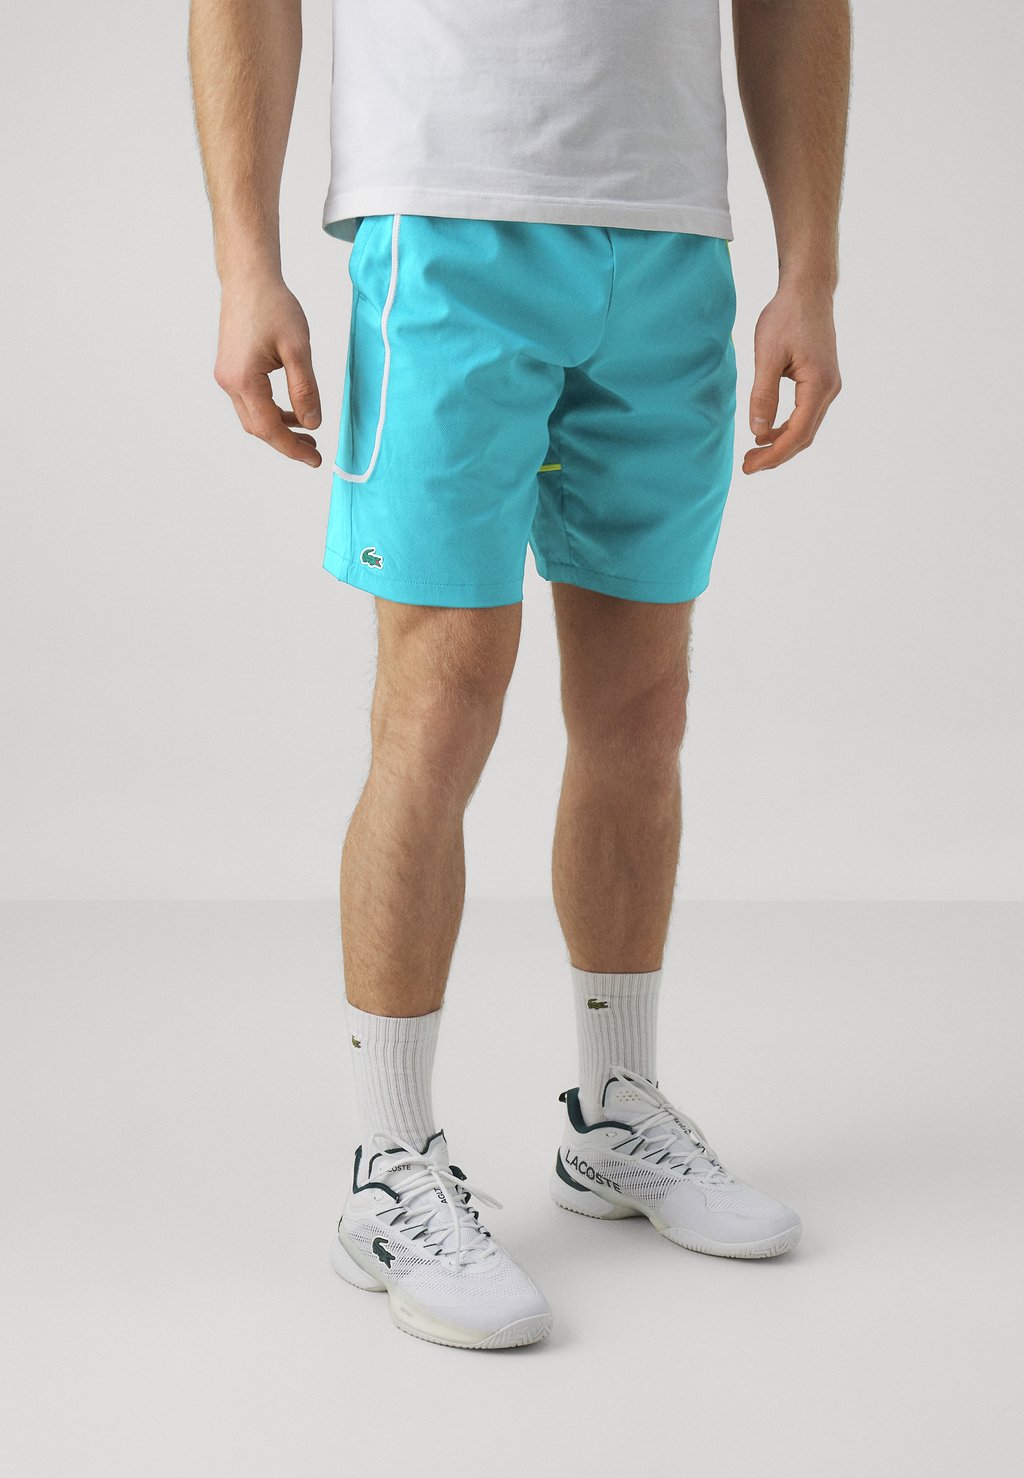 Спортивные шорты Shorts Tennis Players Lacoste, цвет hydro спортивные шорты shorts tennis players lacoste sport цвет navy blue